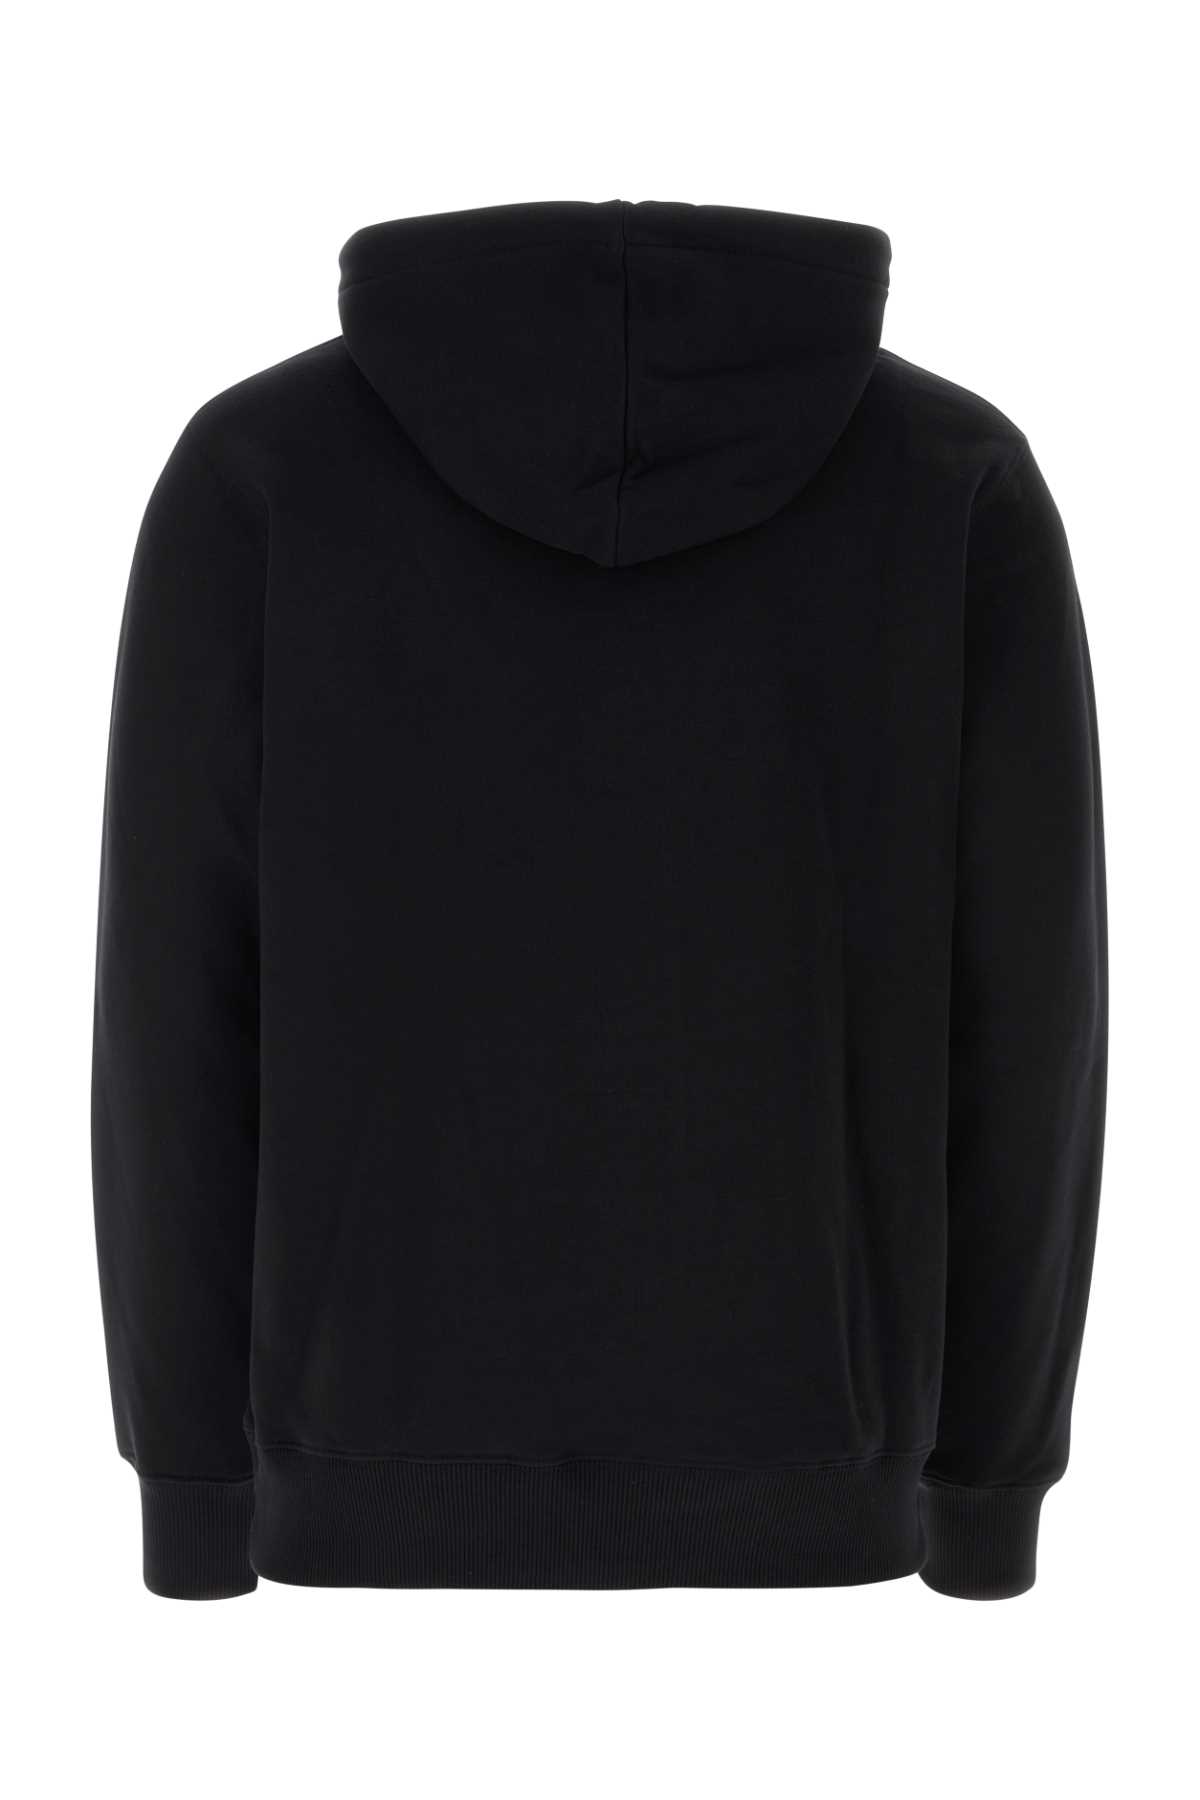 Shop Etudes Studio Black Cotton Sweatshirt